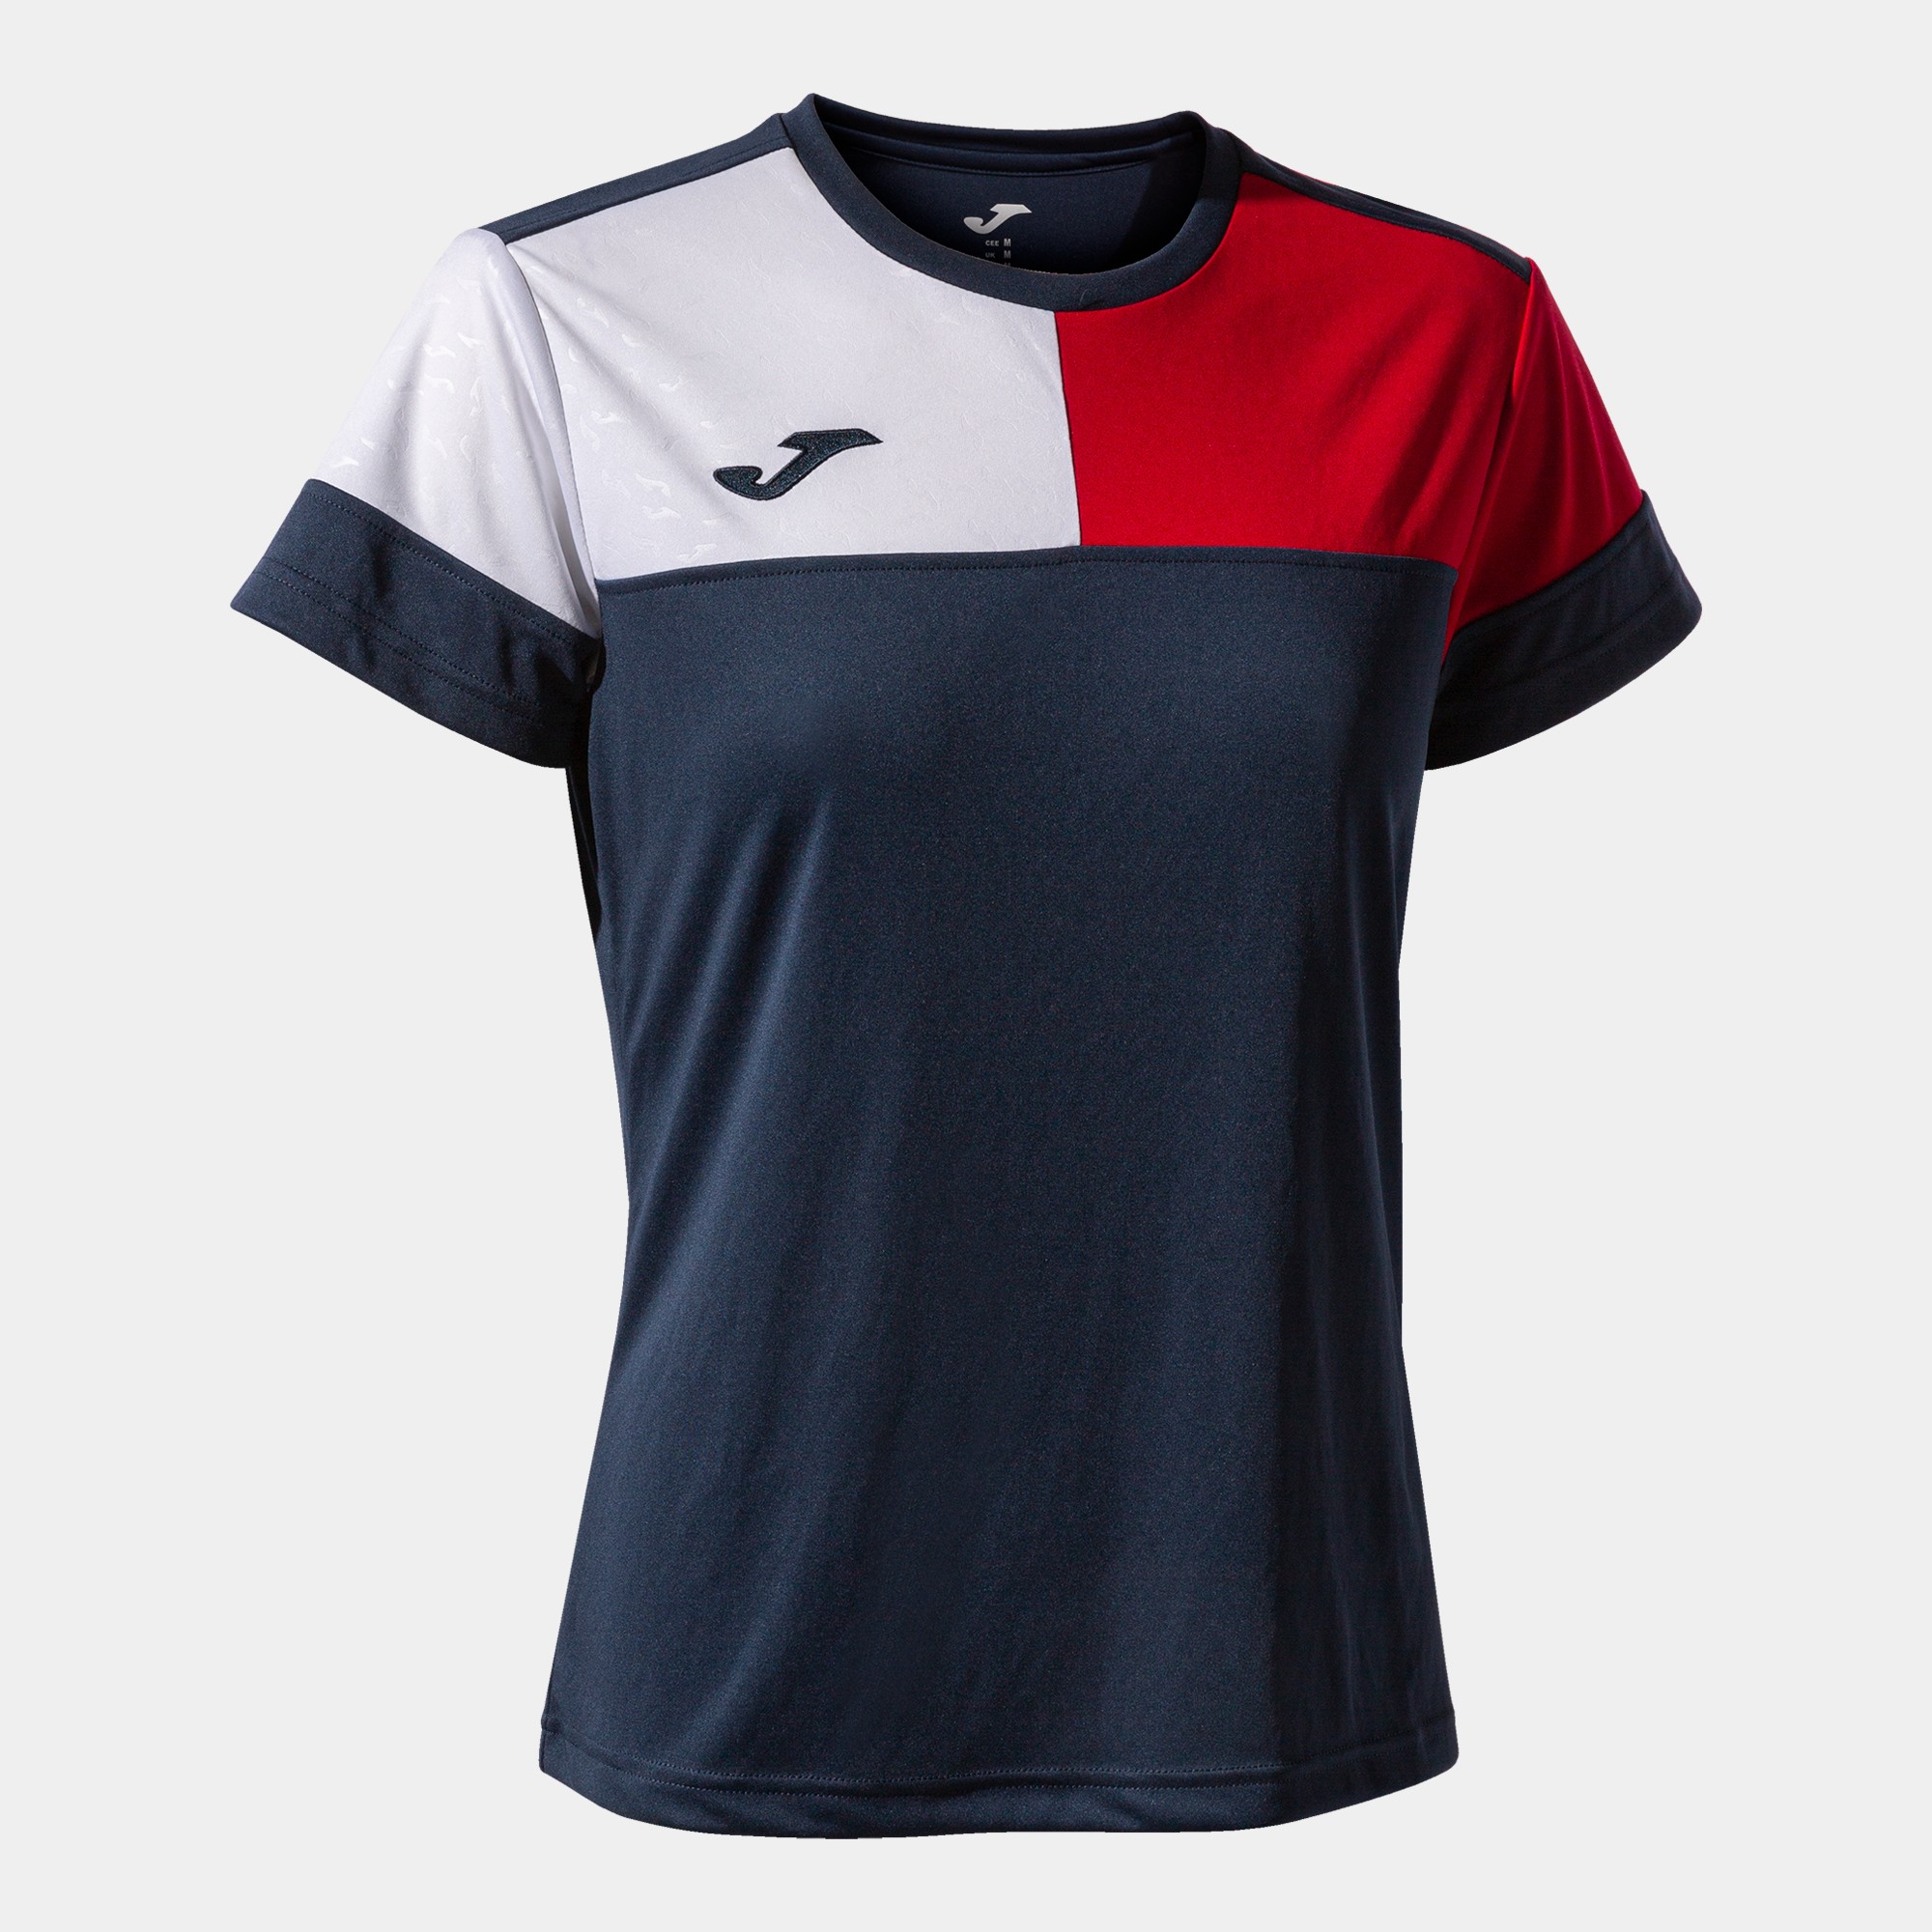 Camiseta Joma CREW V 901856.336 - Deportes Manzanedo